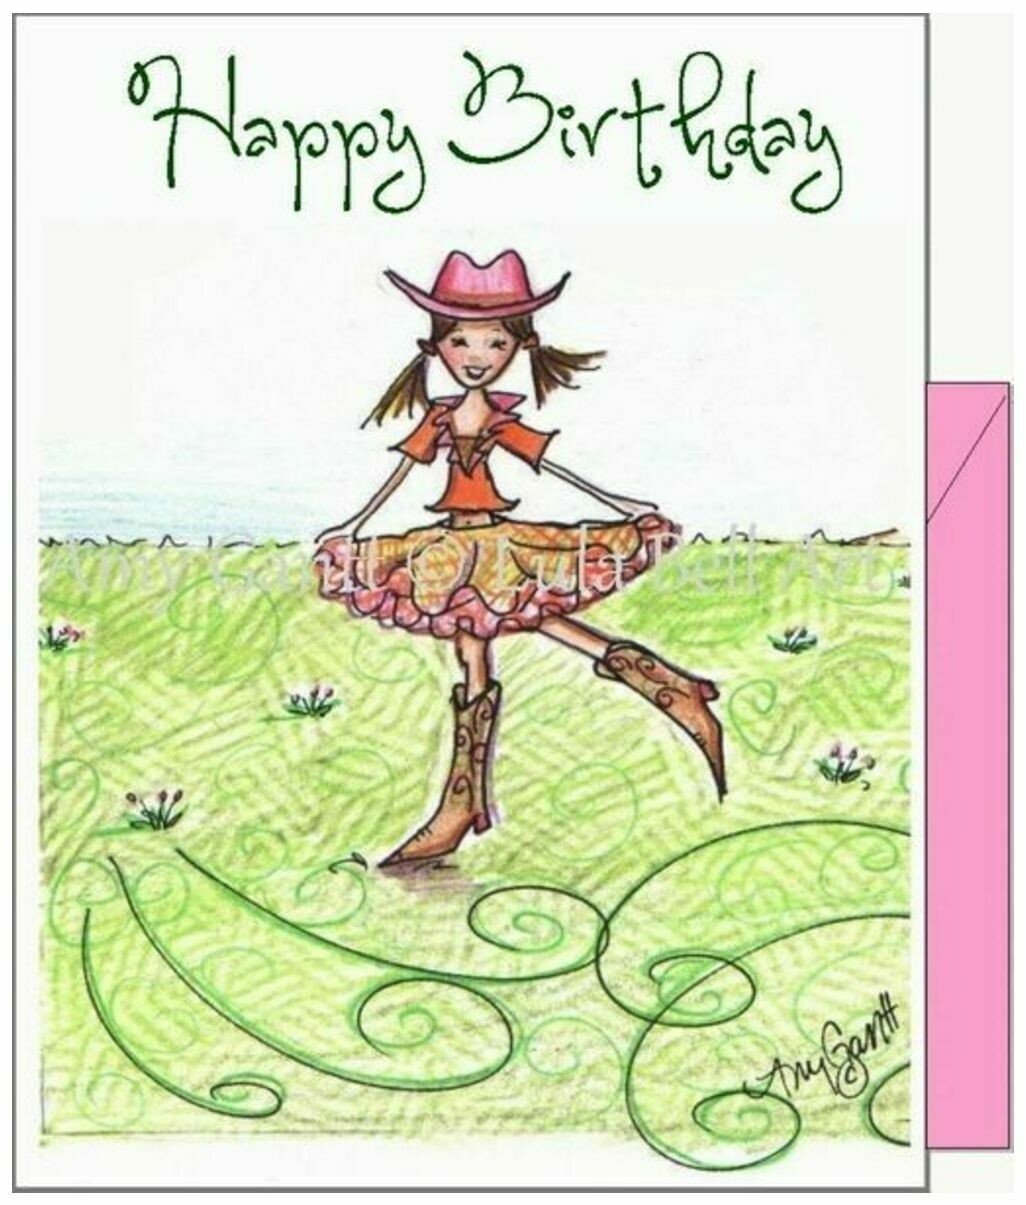 Happy Birthday Girl Greeting Card